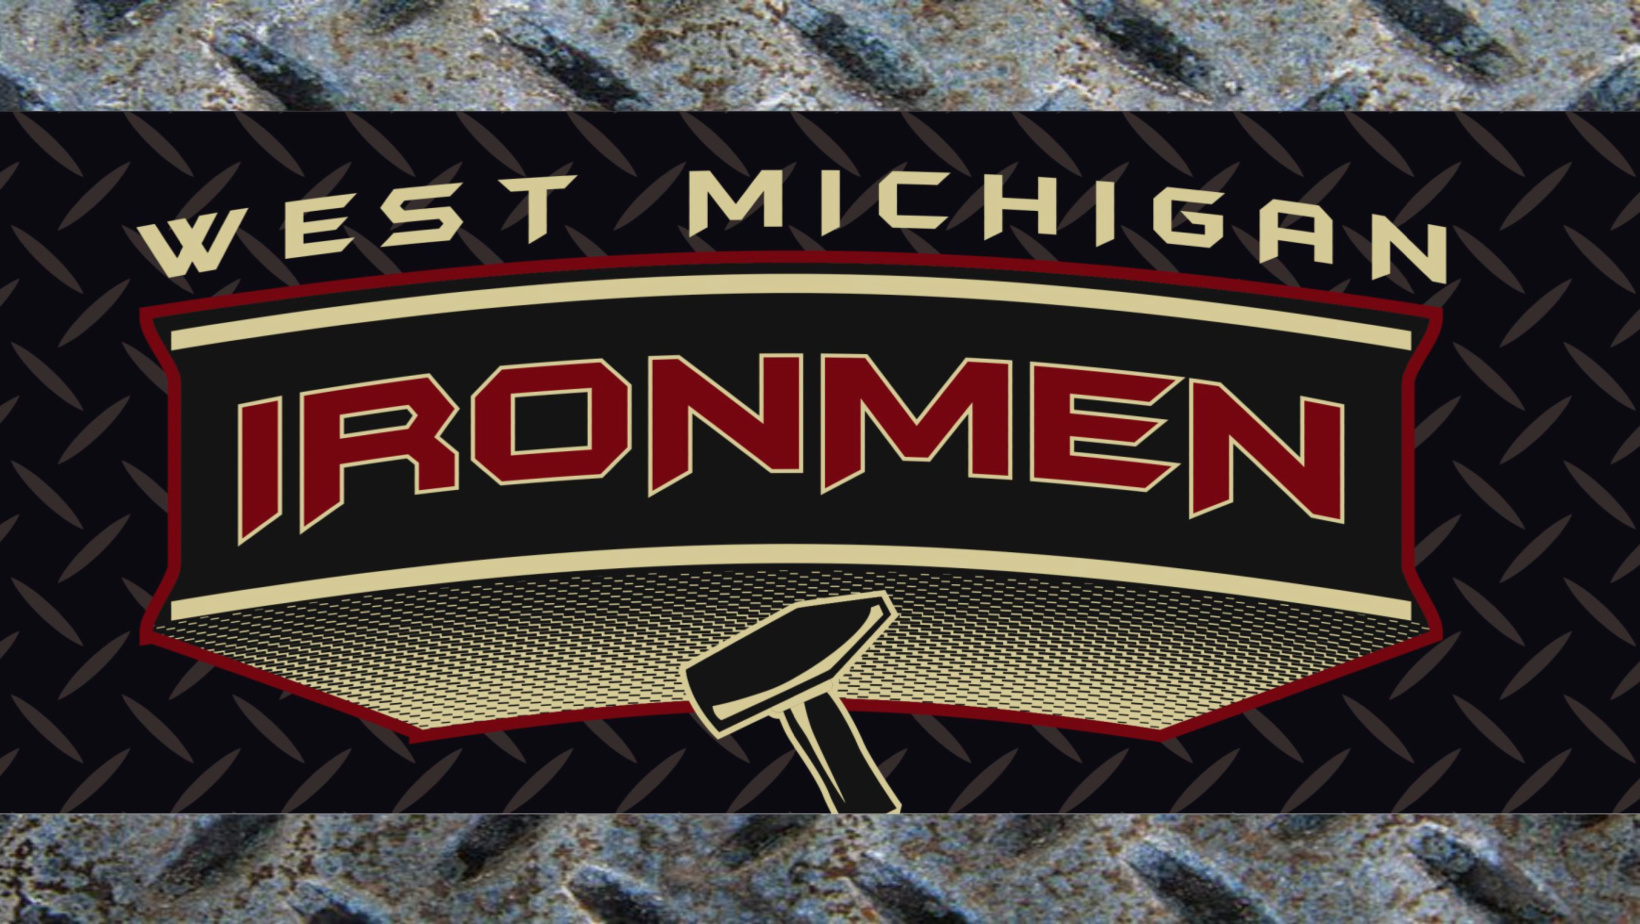 About Us West Michigan Ironmen